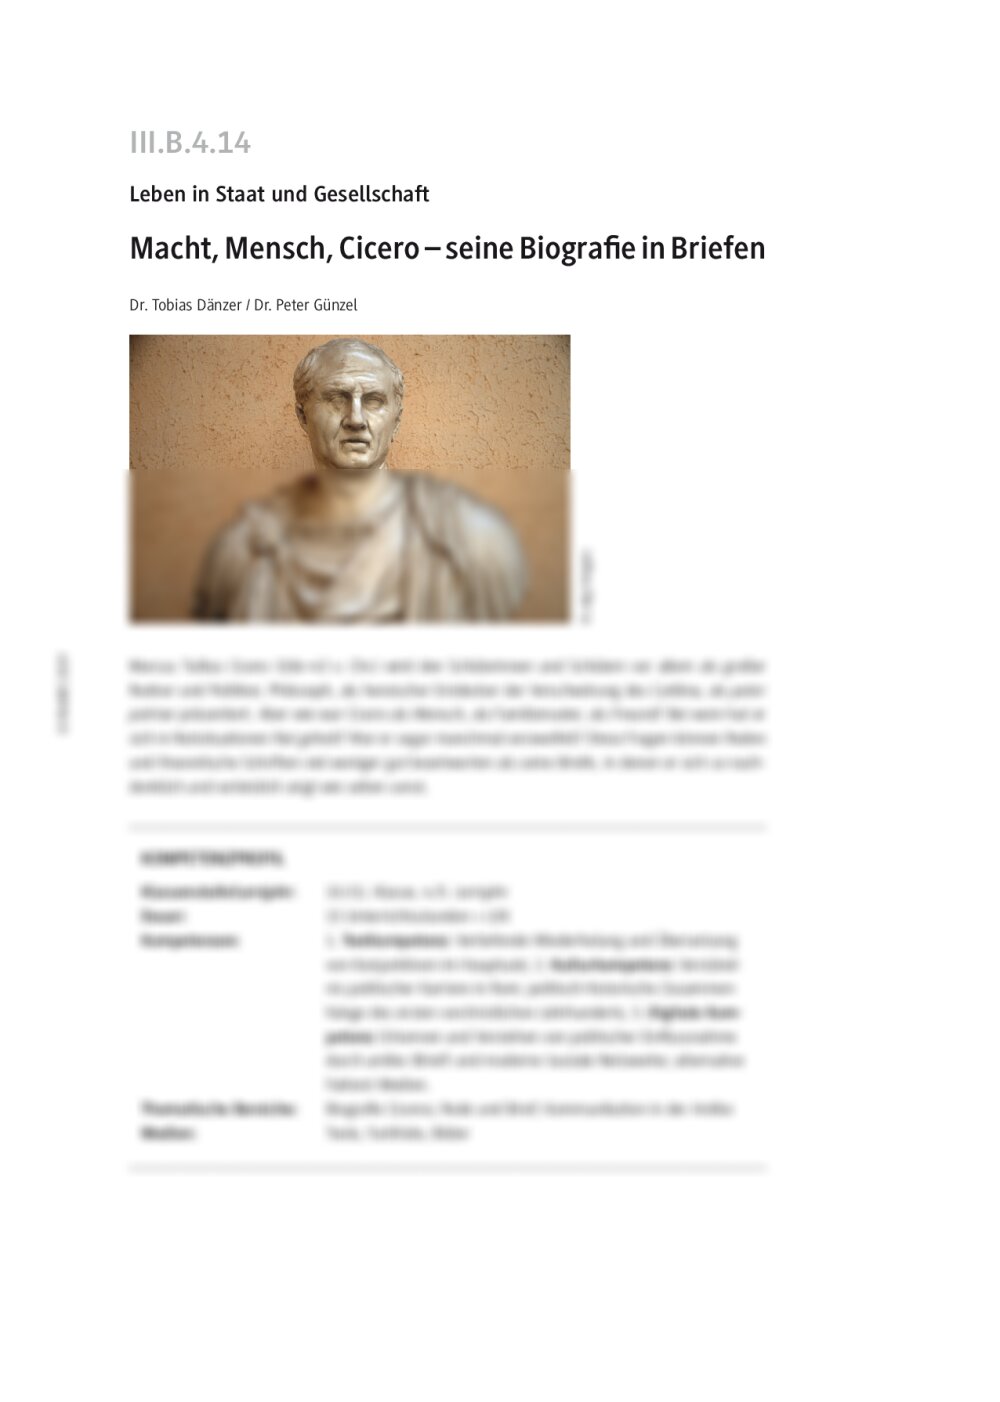 Ciceros Biografie entdecken - Seite 1